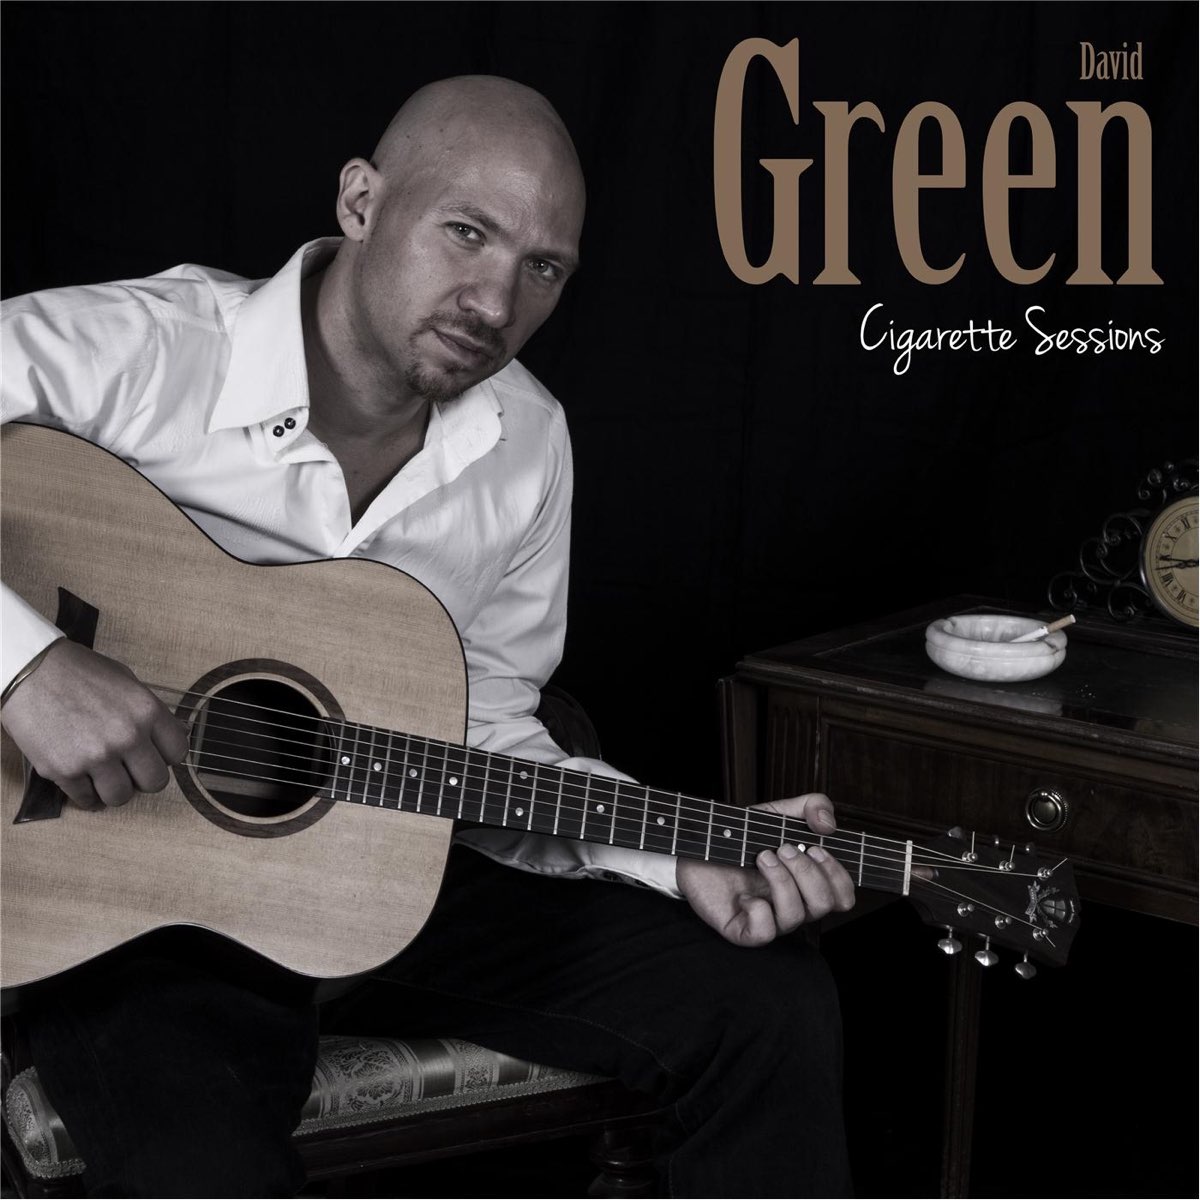 Грине дэвид. Dave Green (musician).